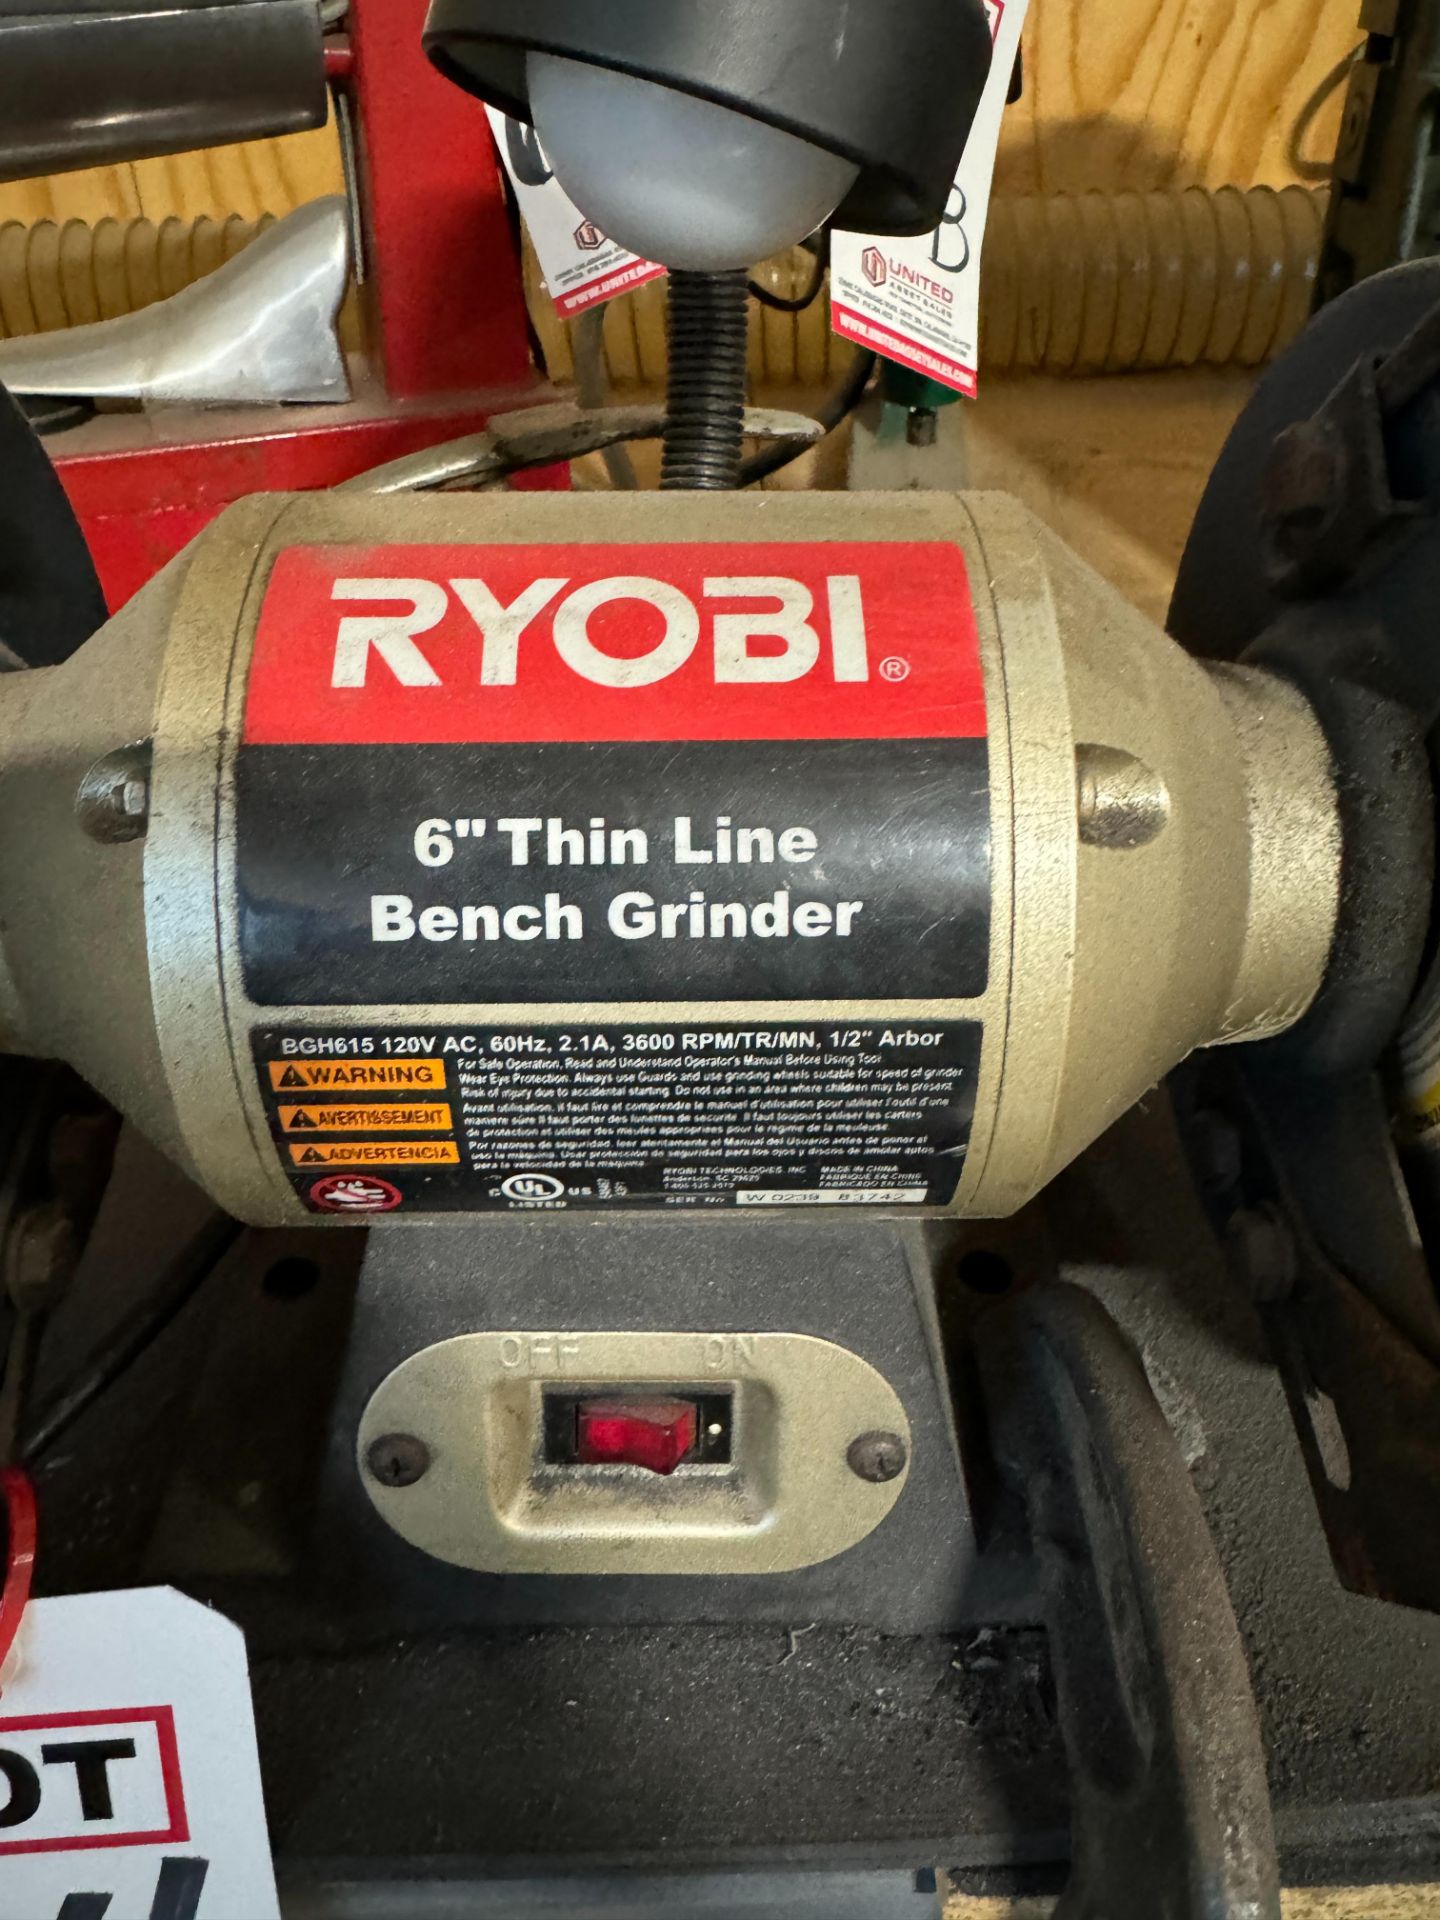 RYOBI 6" THIN LINE BENCH GRINDER, 1/2" ARBOR - Image 2 of 2